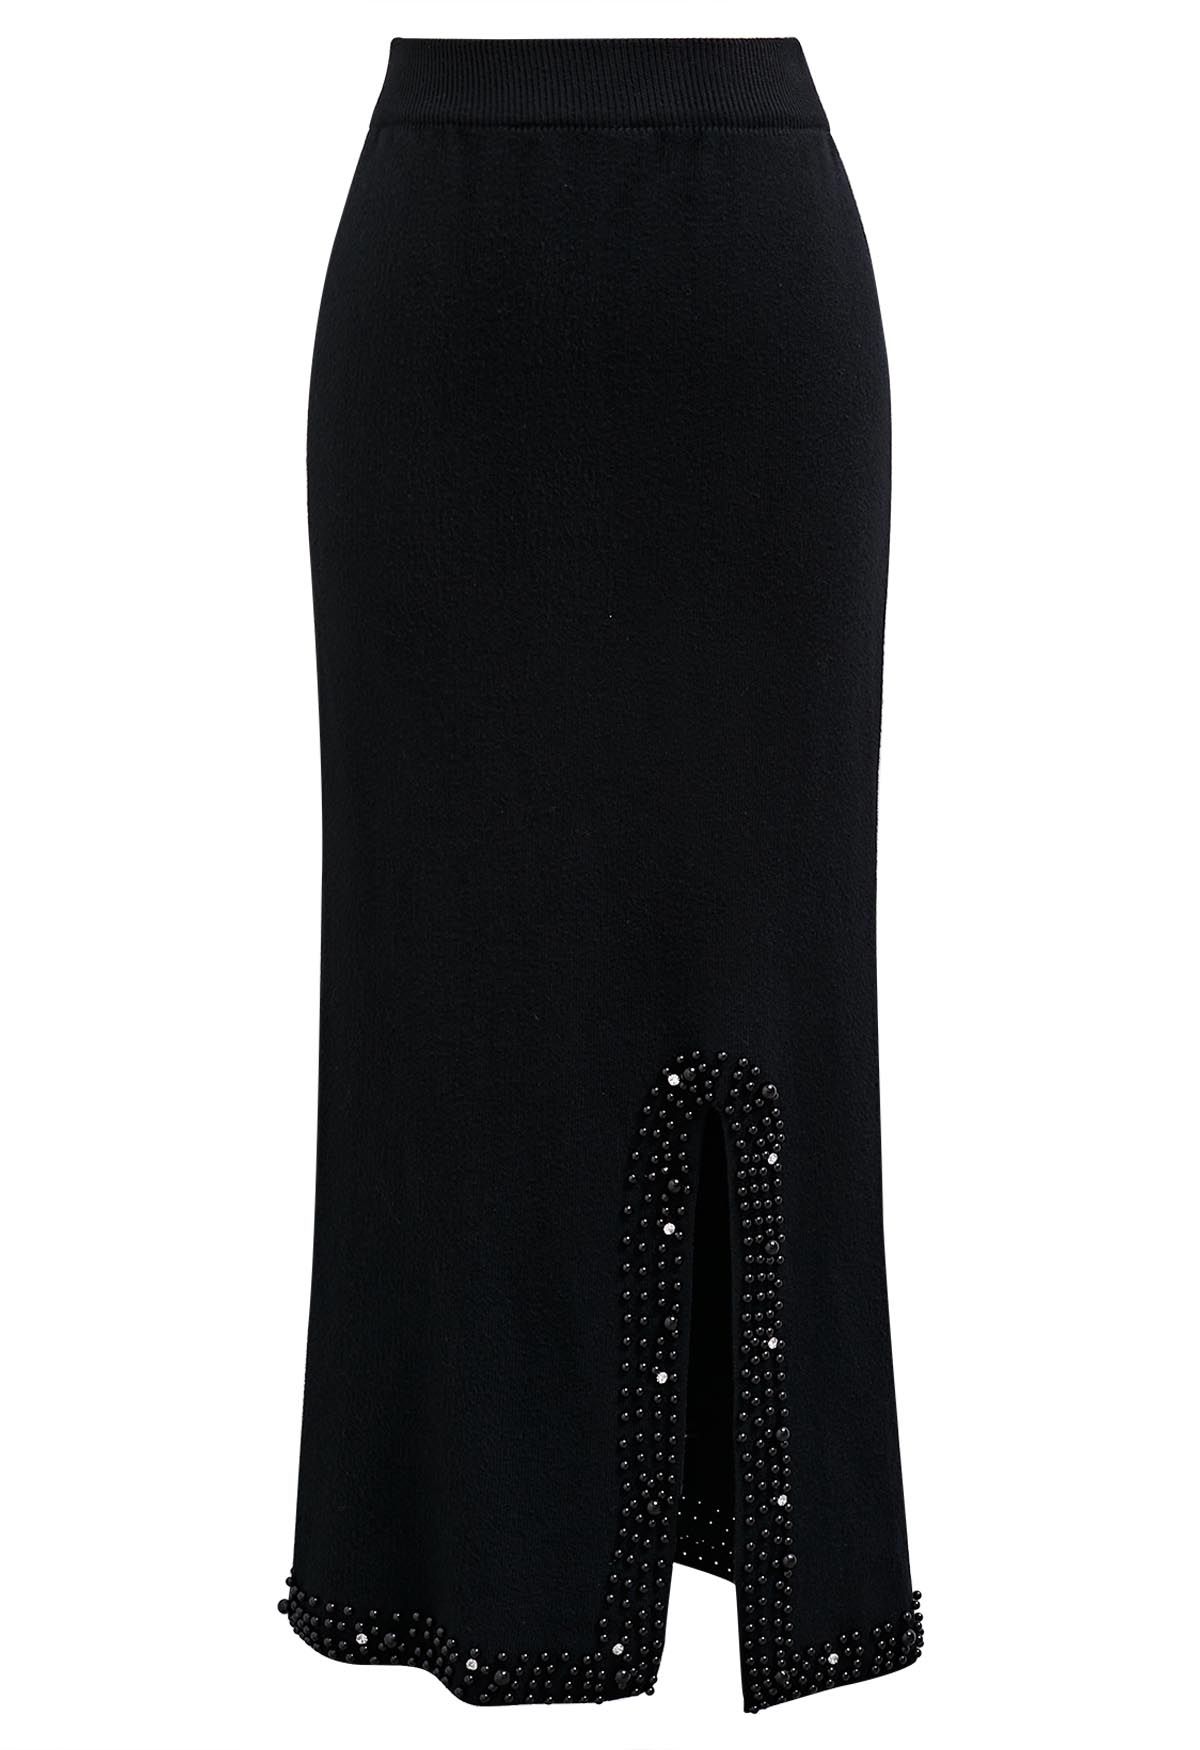 Pearl Embellished Slit Hem Knit Pencil Skirt in Black - Retro, Indie ...